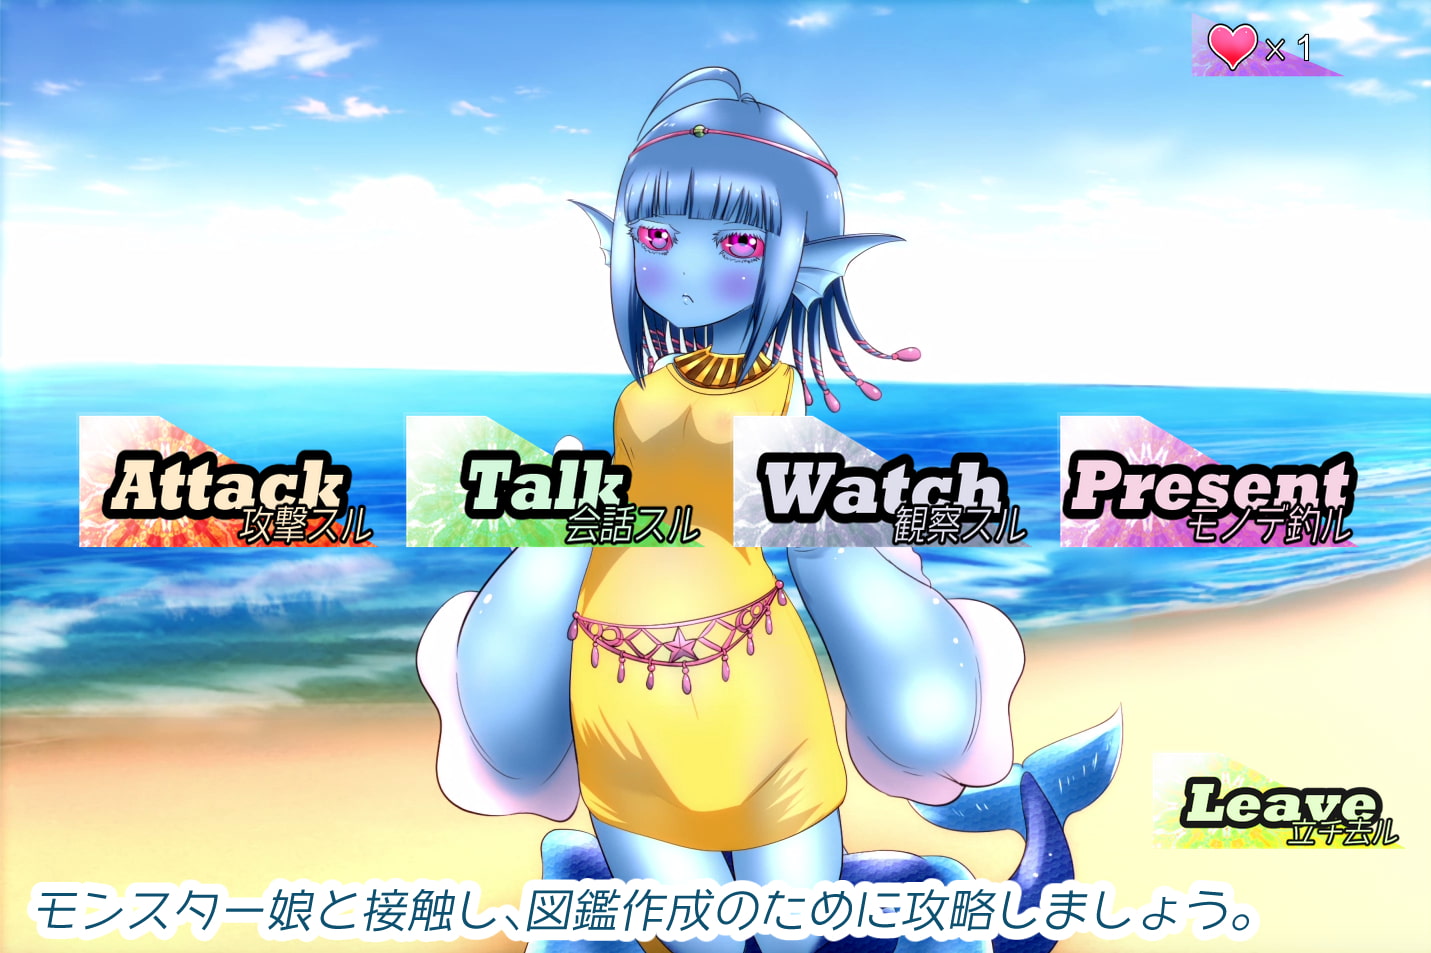 MonZuka! Let's Collect Monster Girl Profiles!